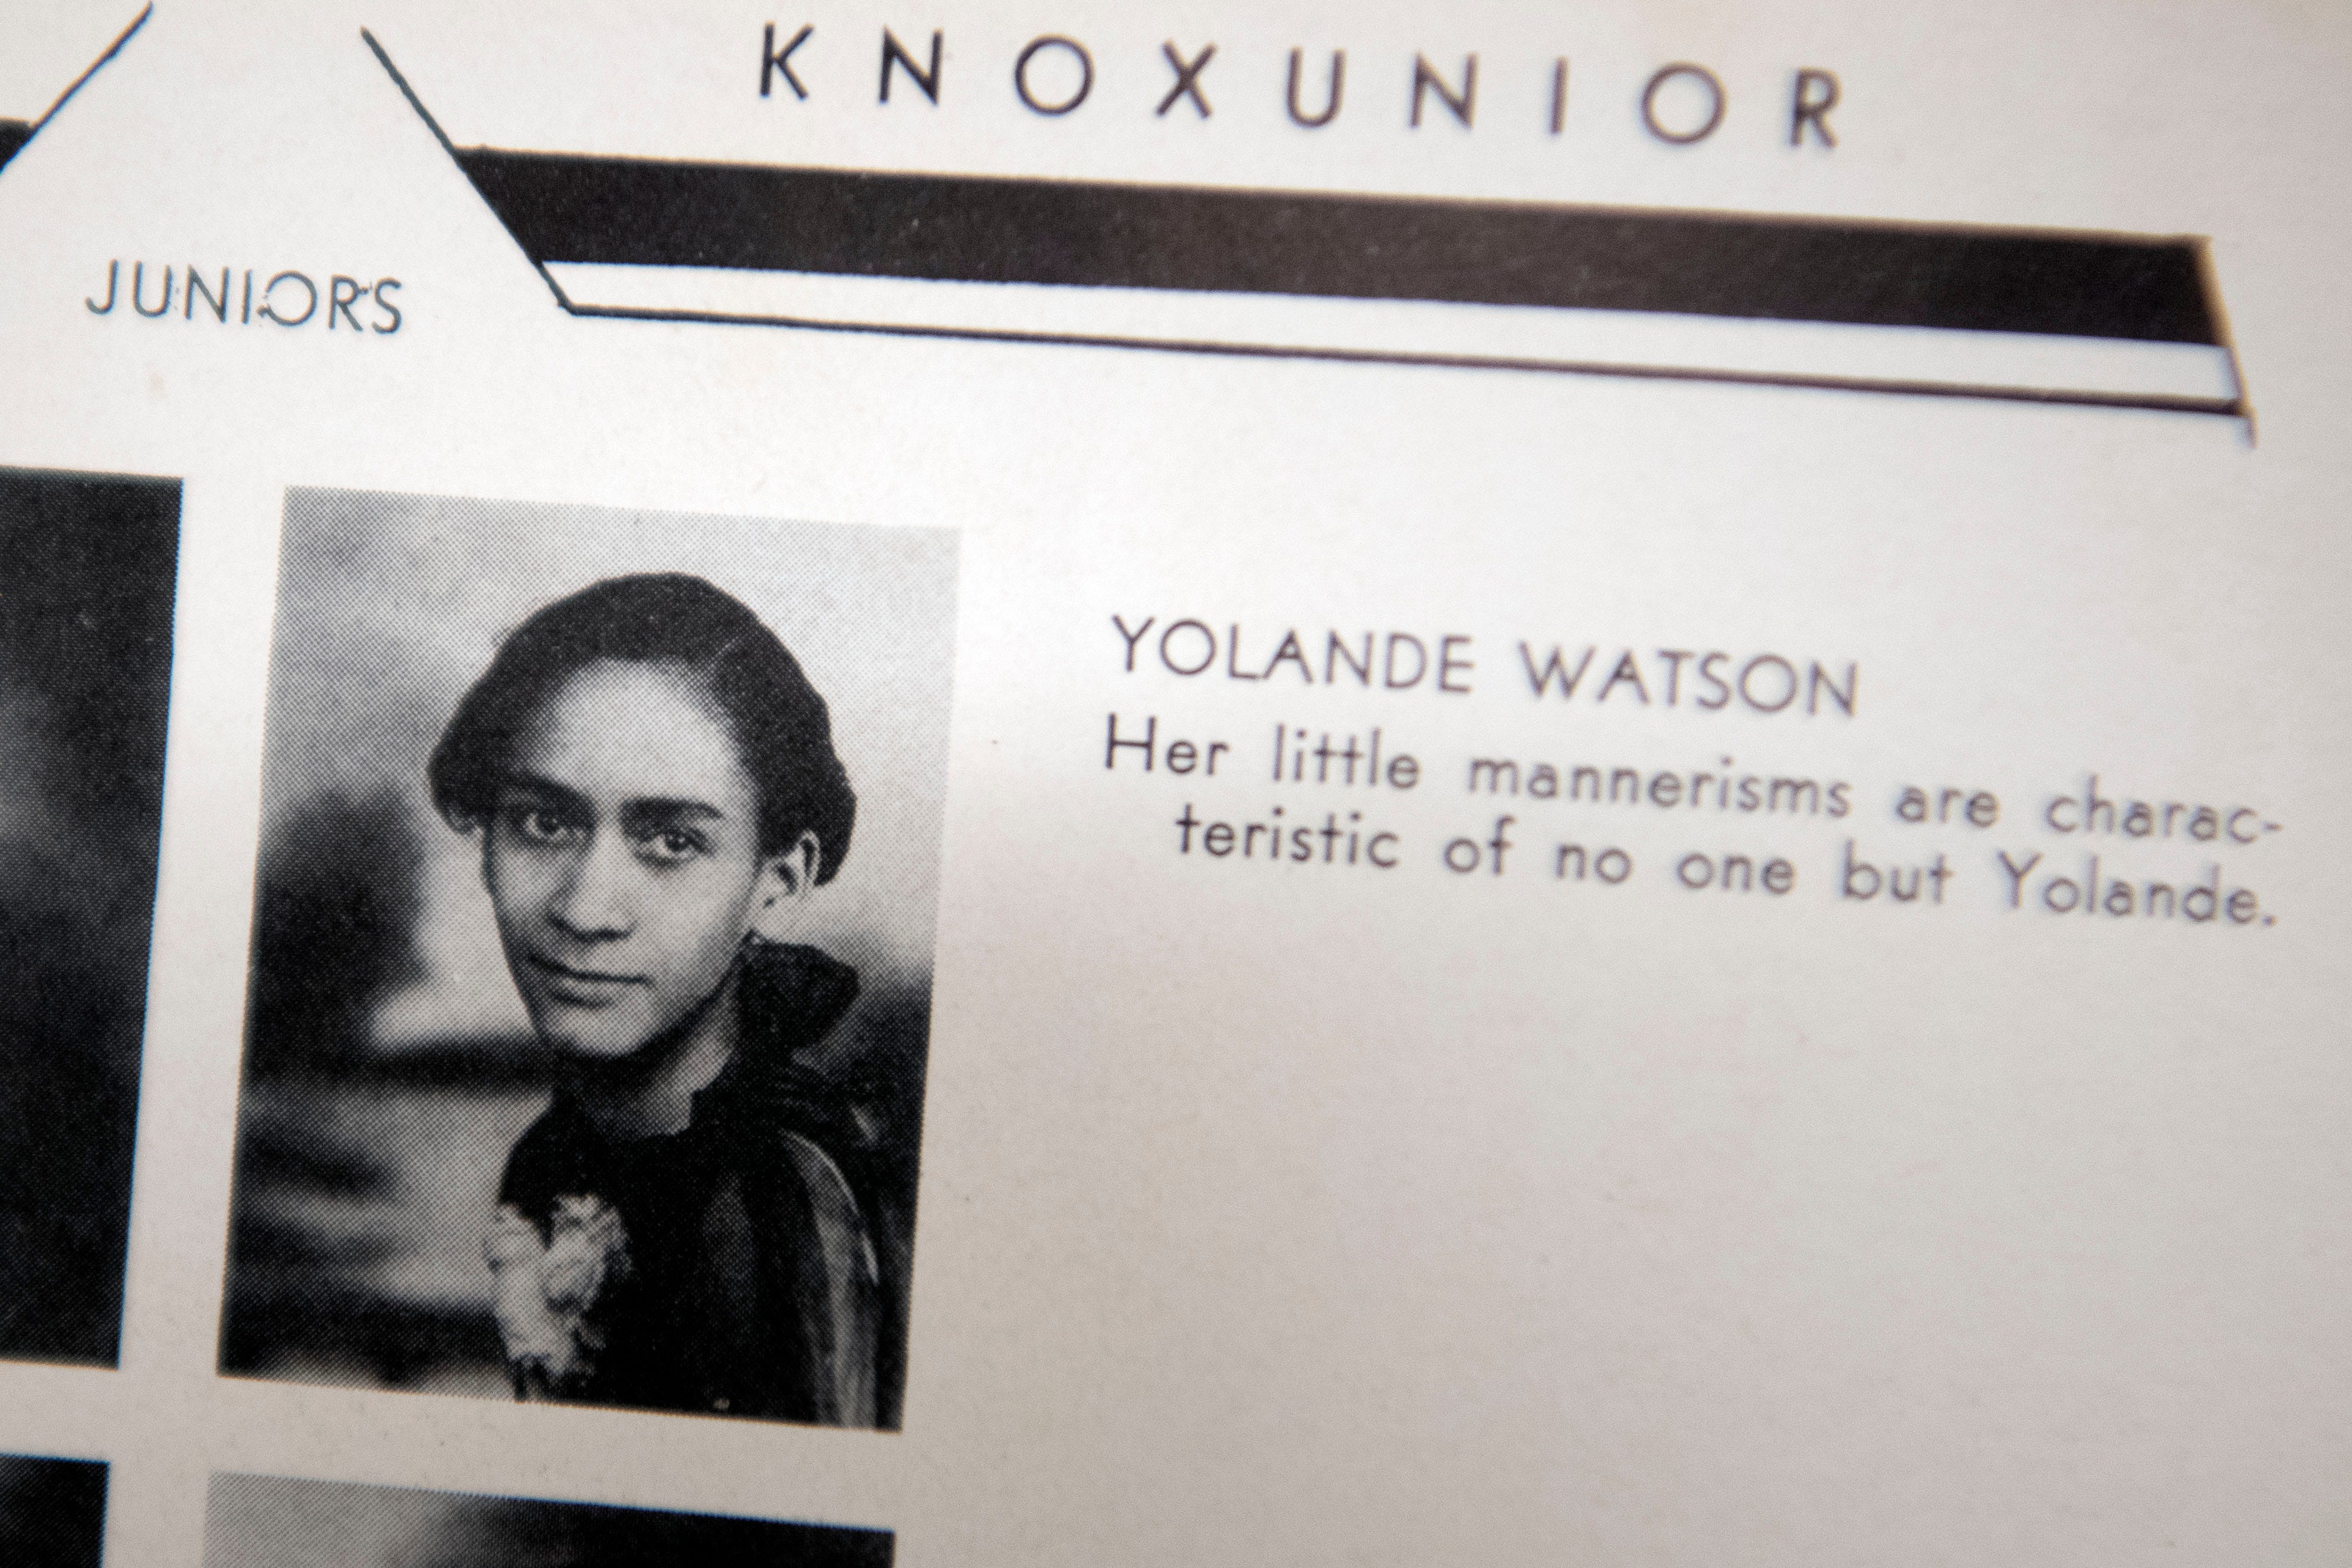 Austin High School yearbook photo of Yolande Watson, Nikki Giovanni's mother. 